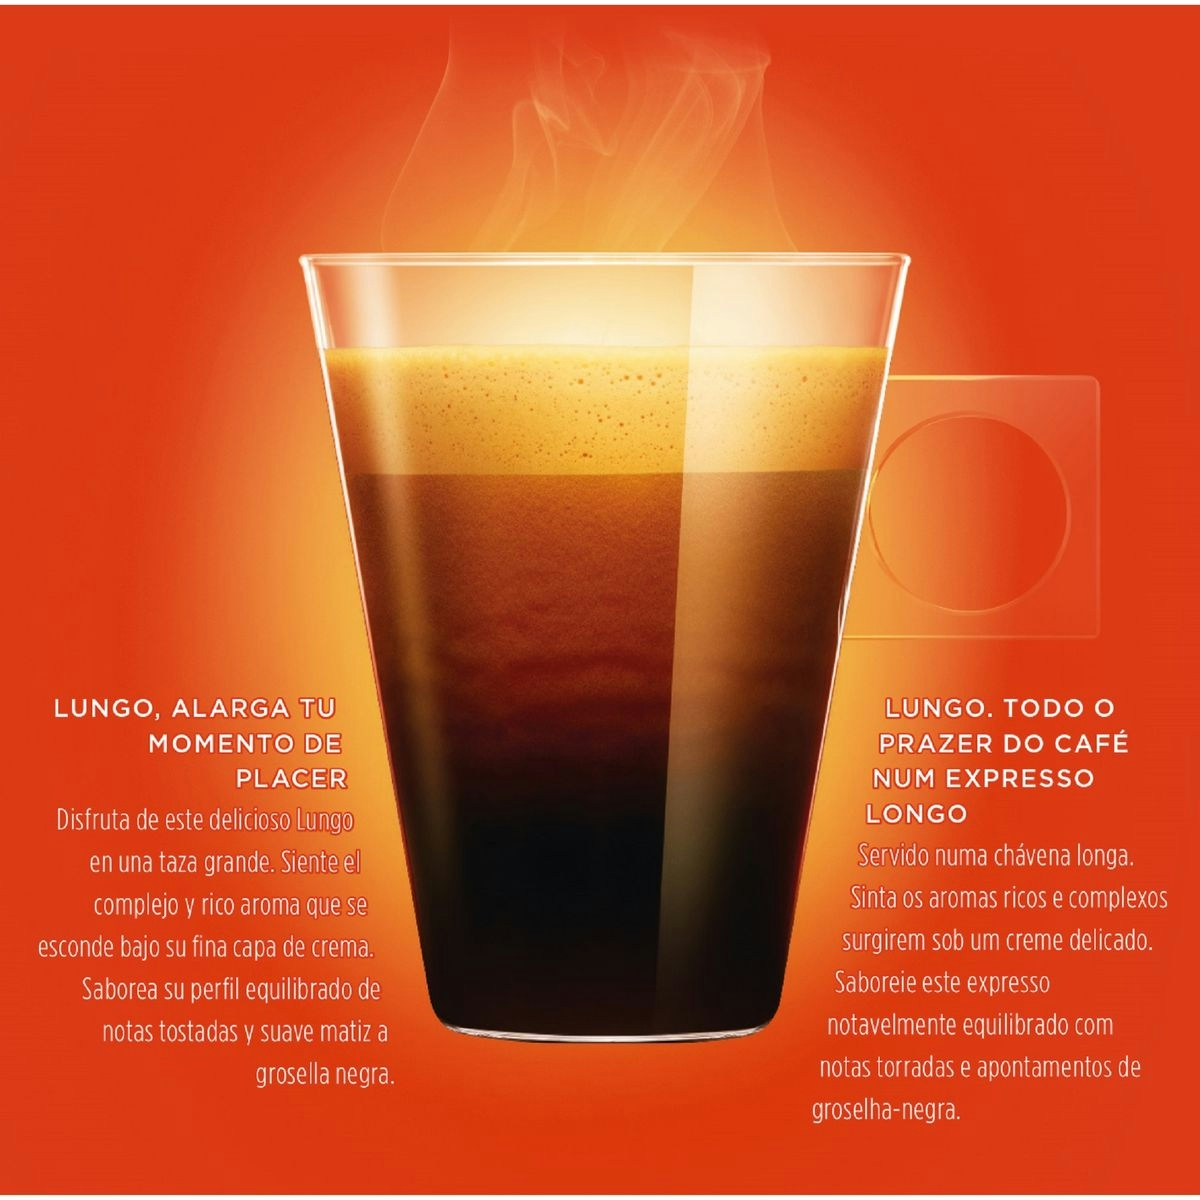 Café lungo DOLCE GUSTO 100% arabica 16 cápsulas caja 100 gr